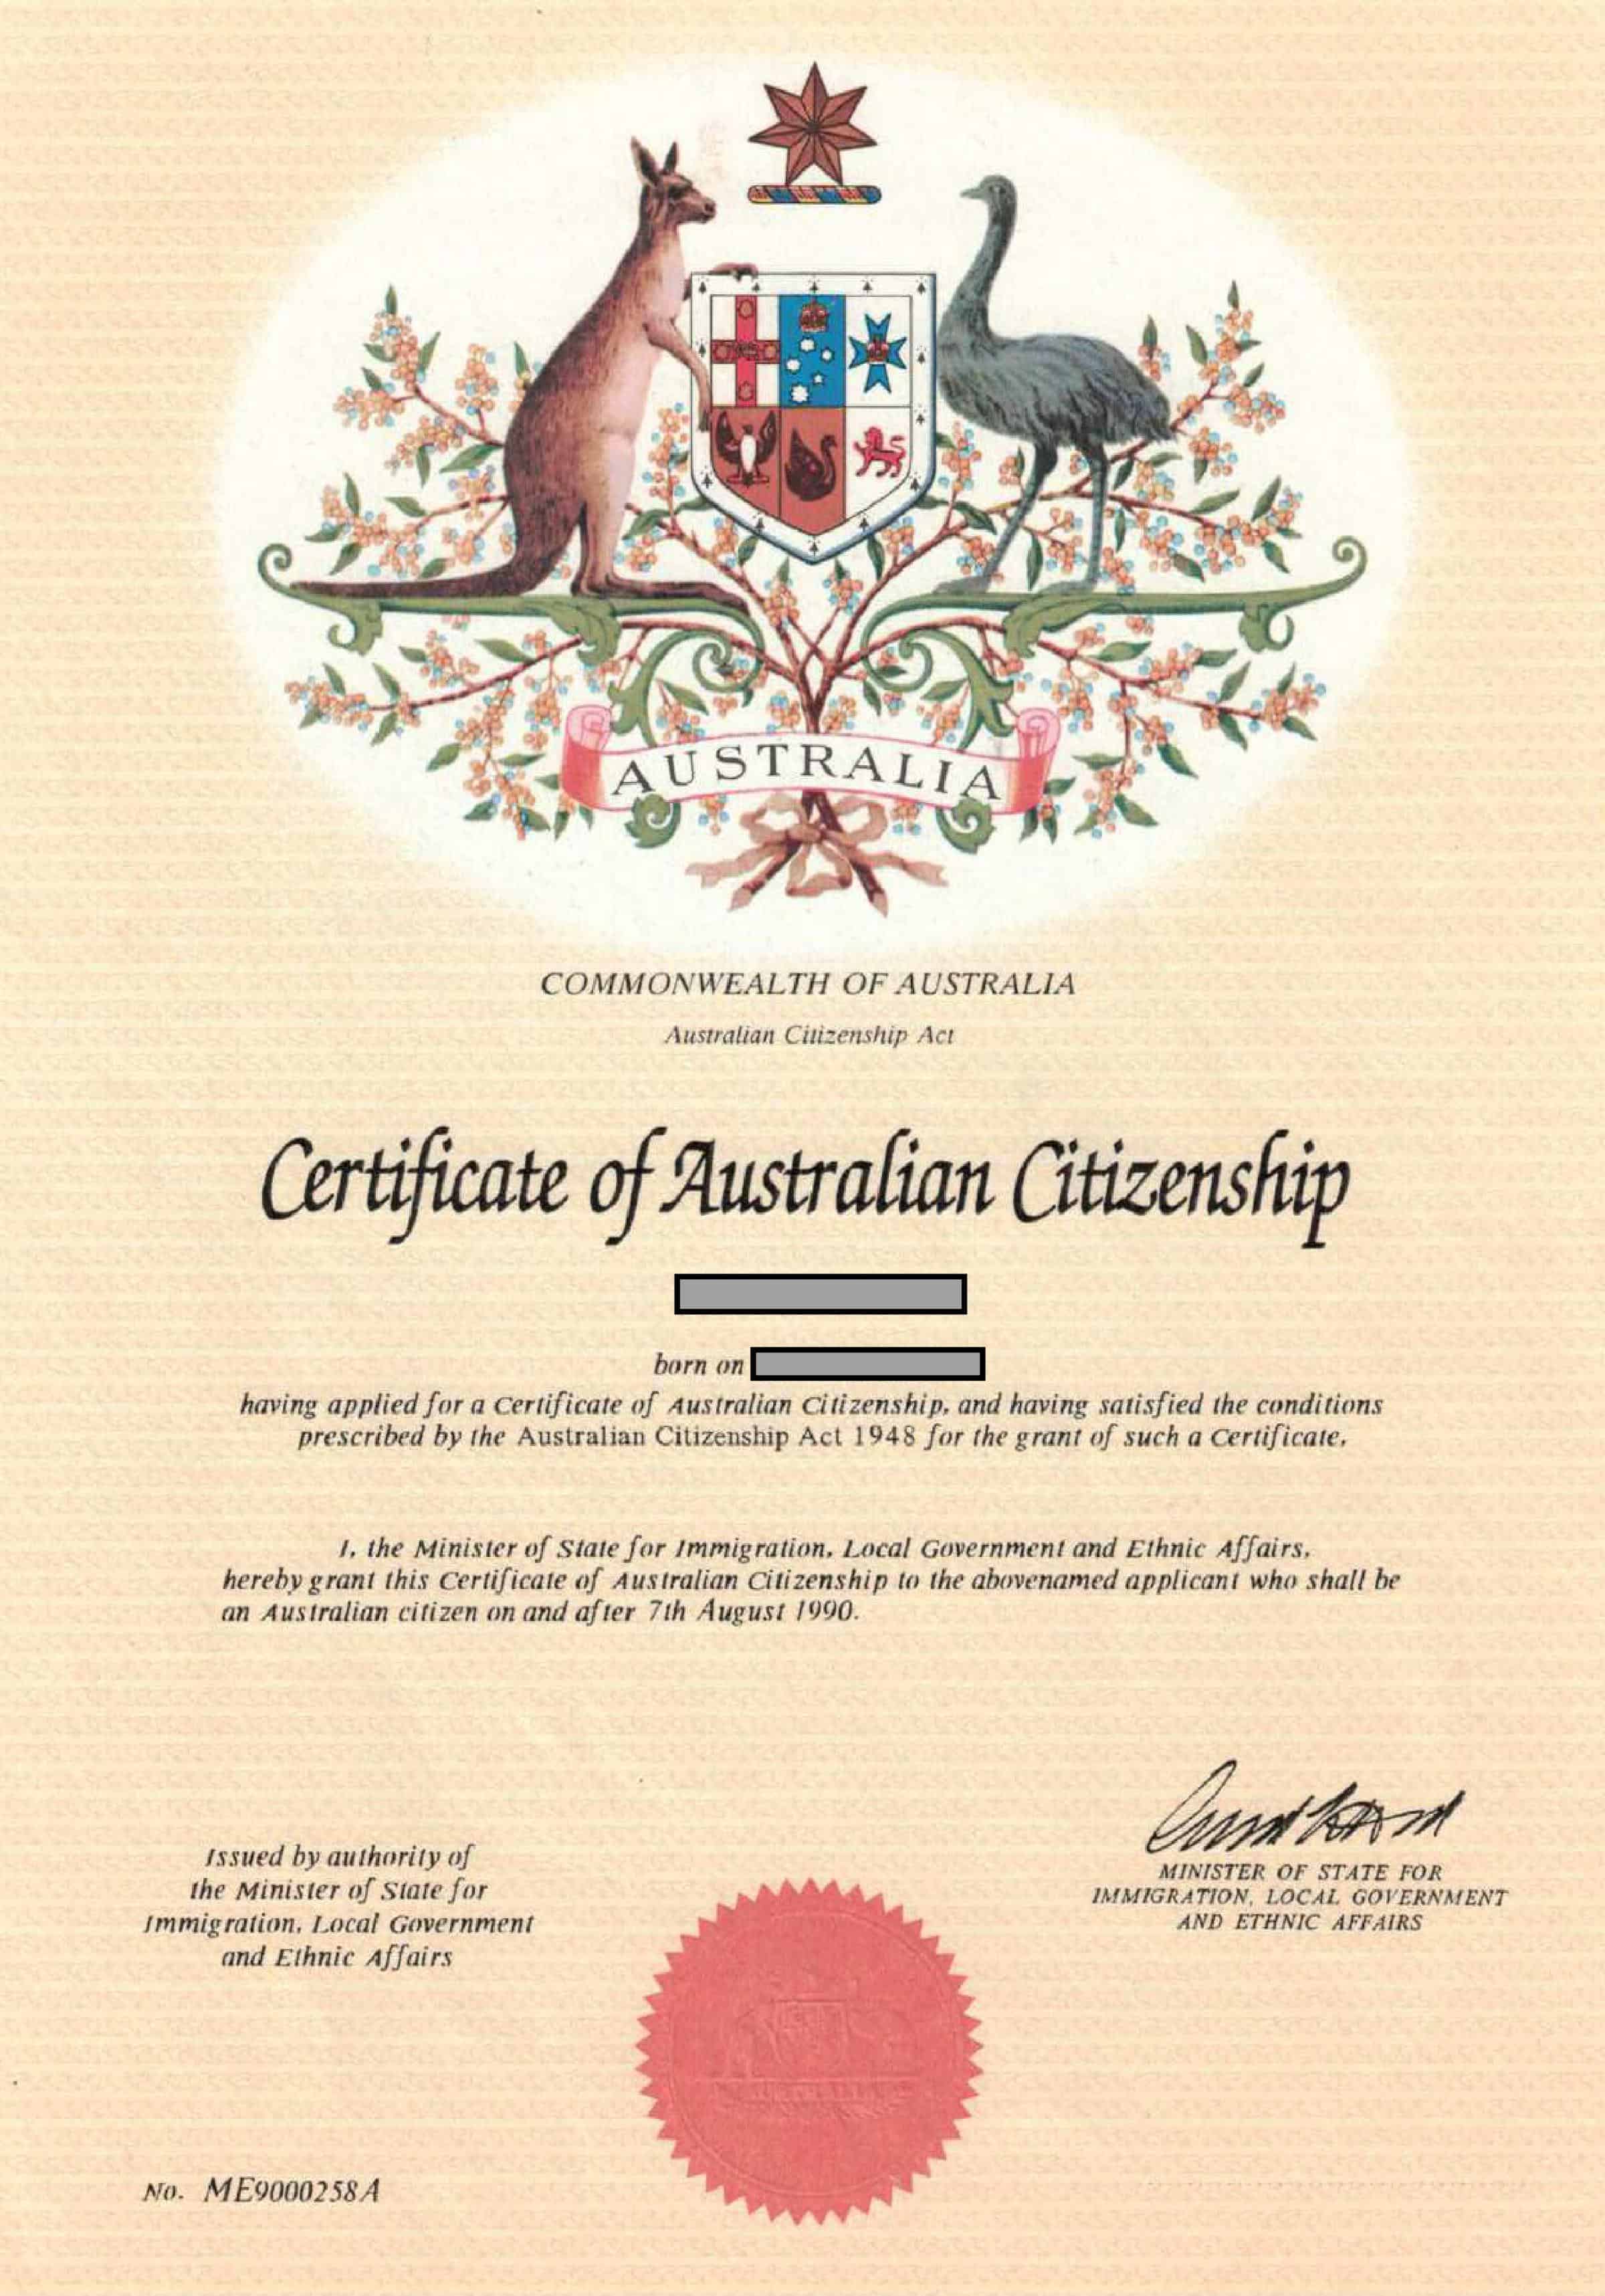 Australian Citizenship granted to children born in Australia on their 10th birthday